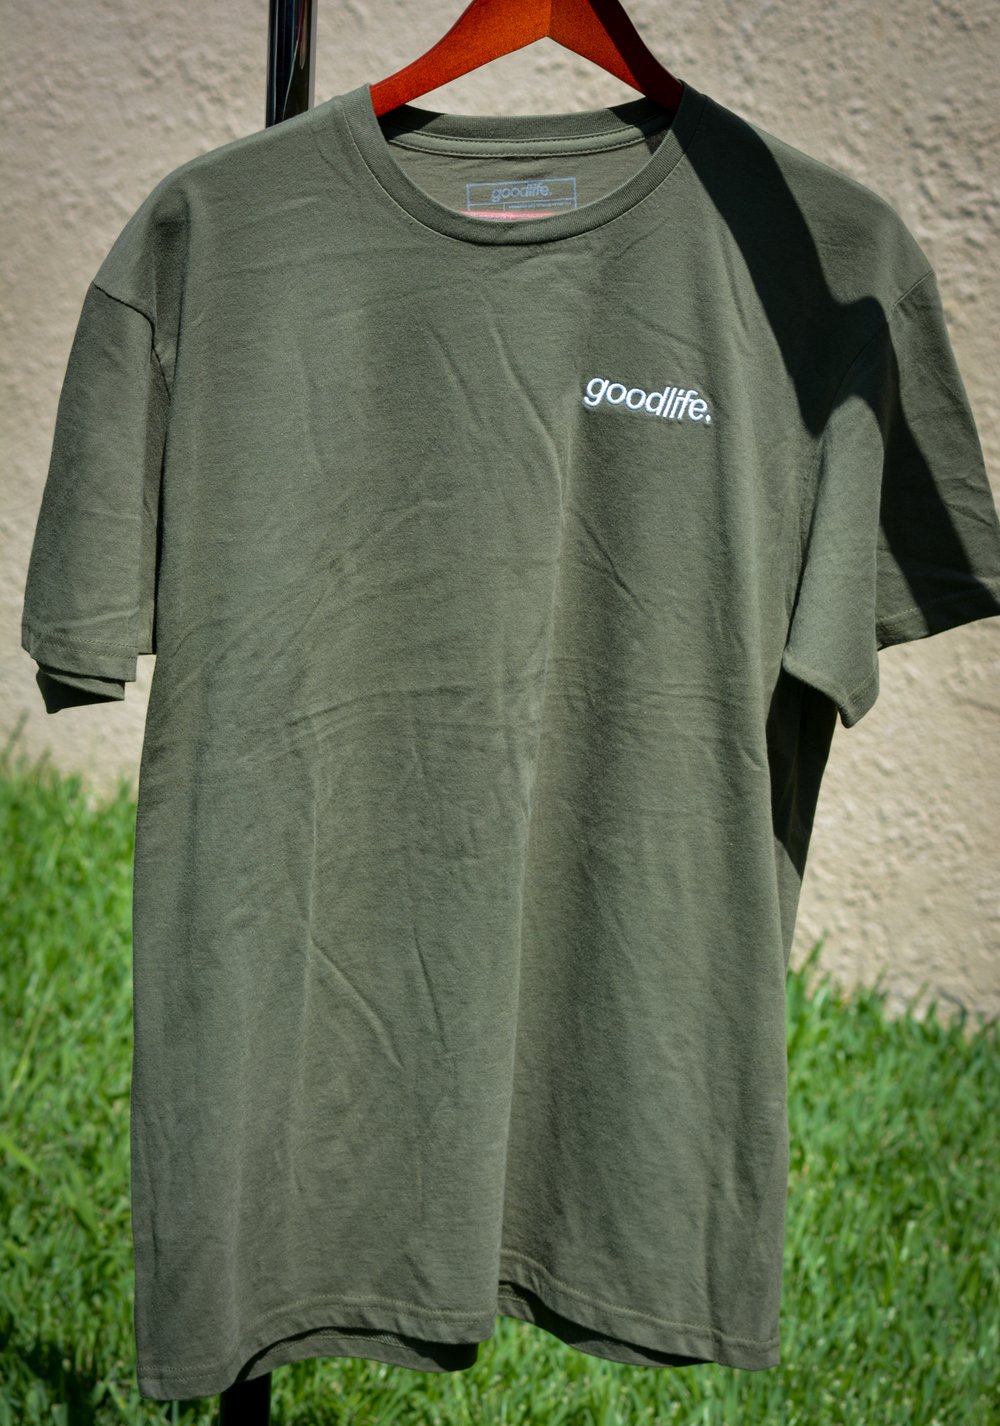 Olive Green Goodlife Shirt